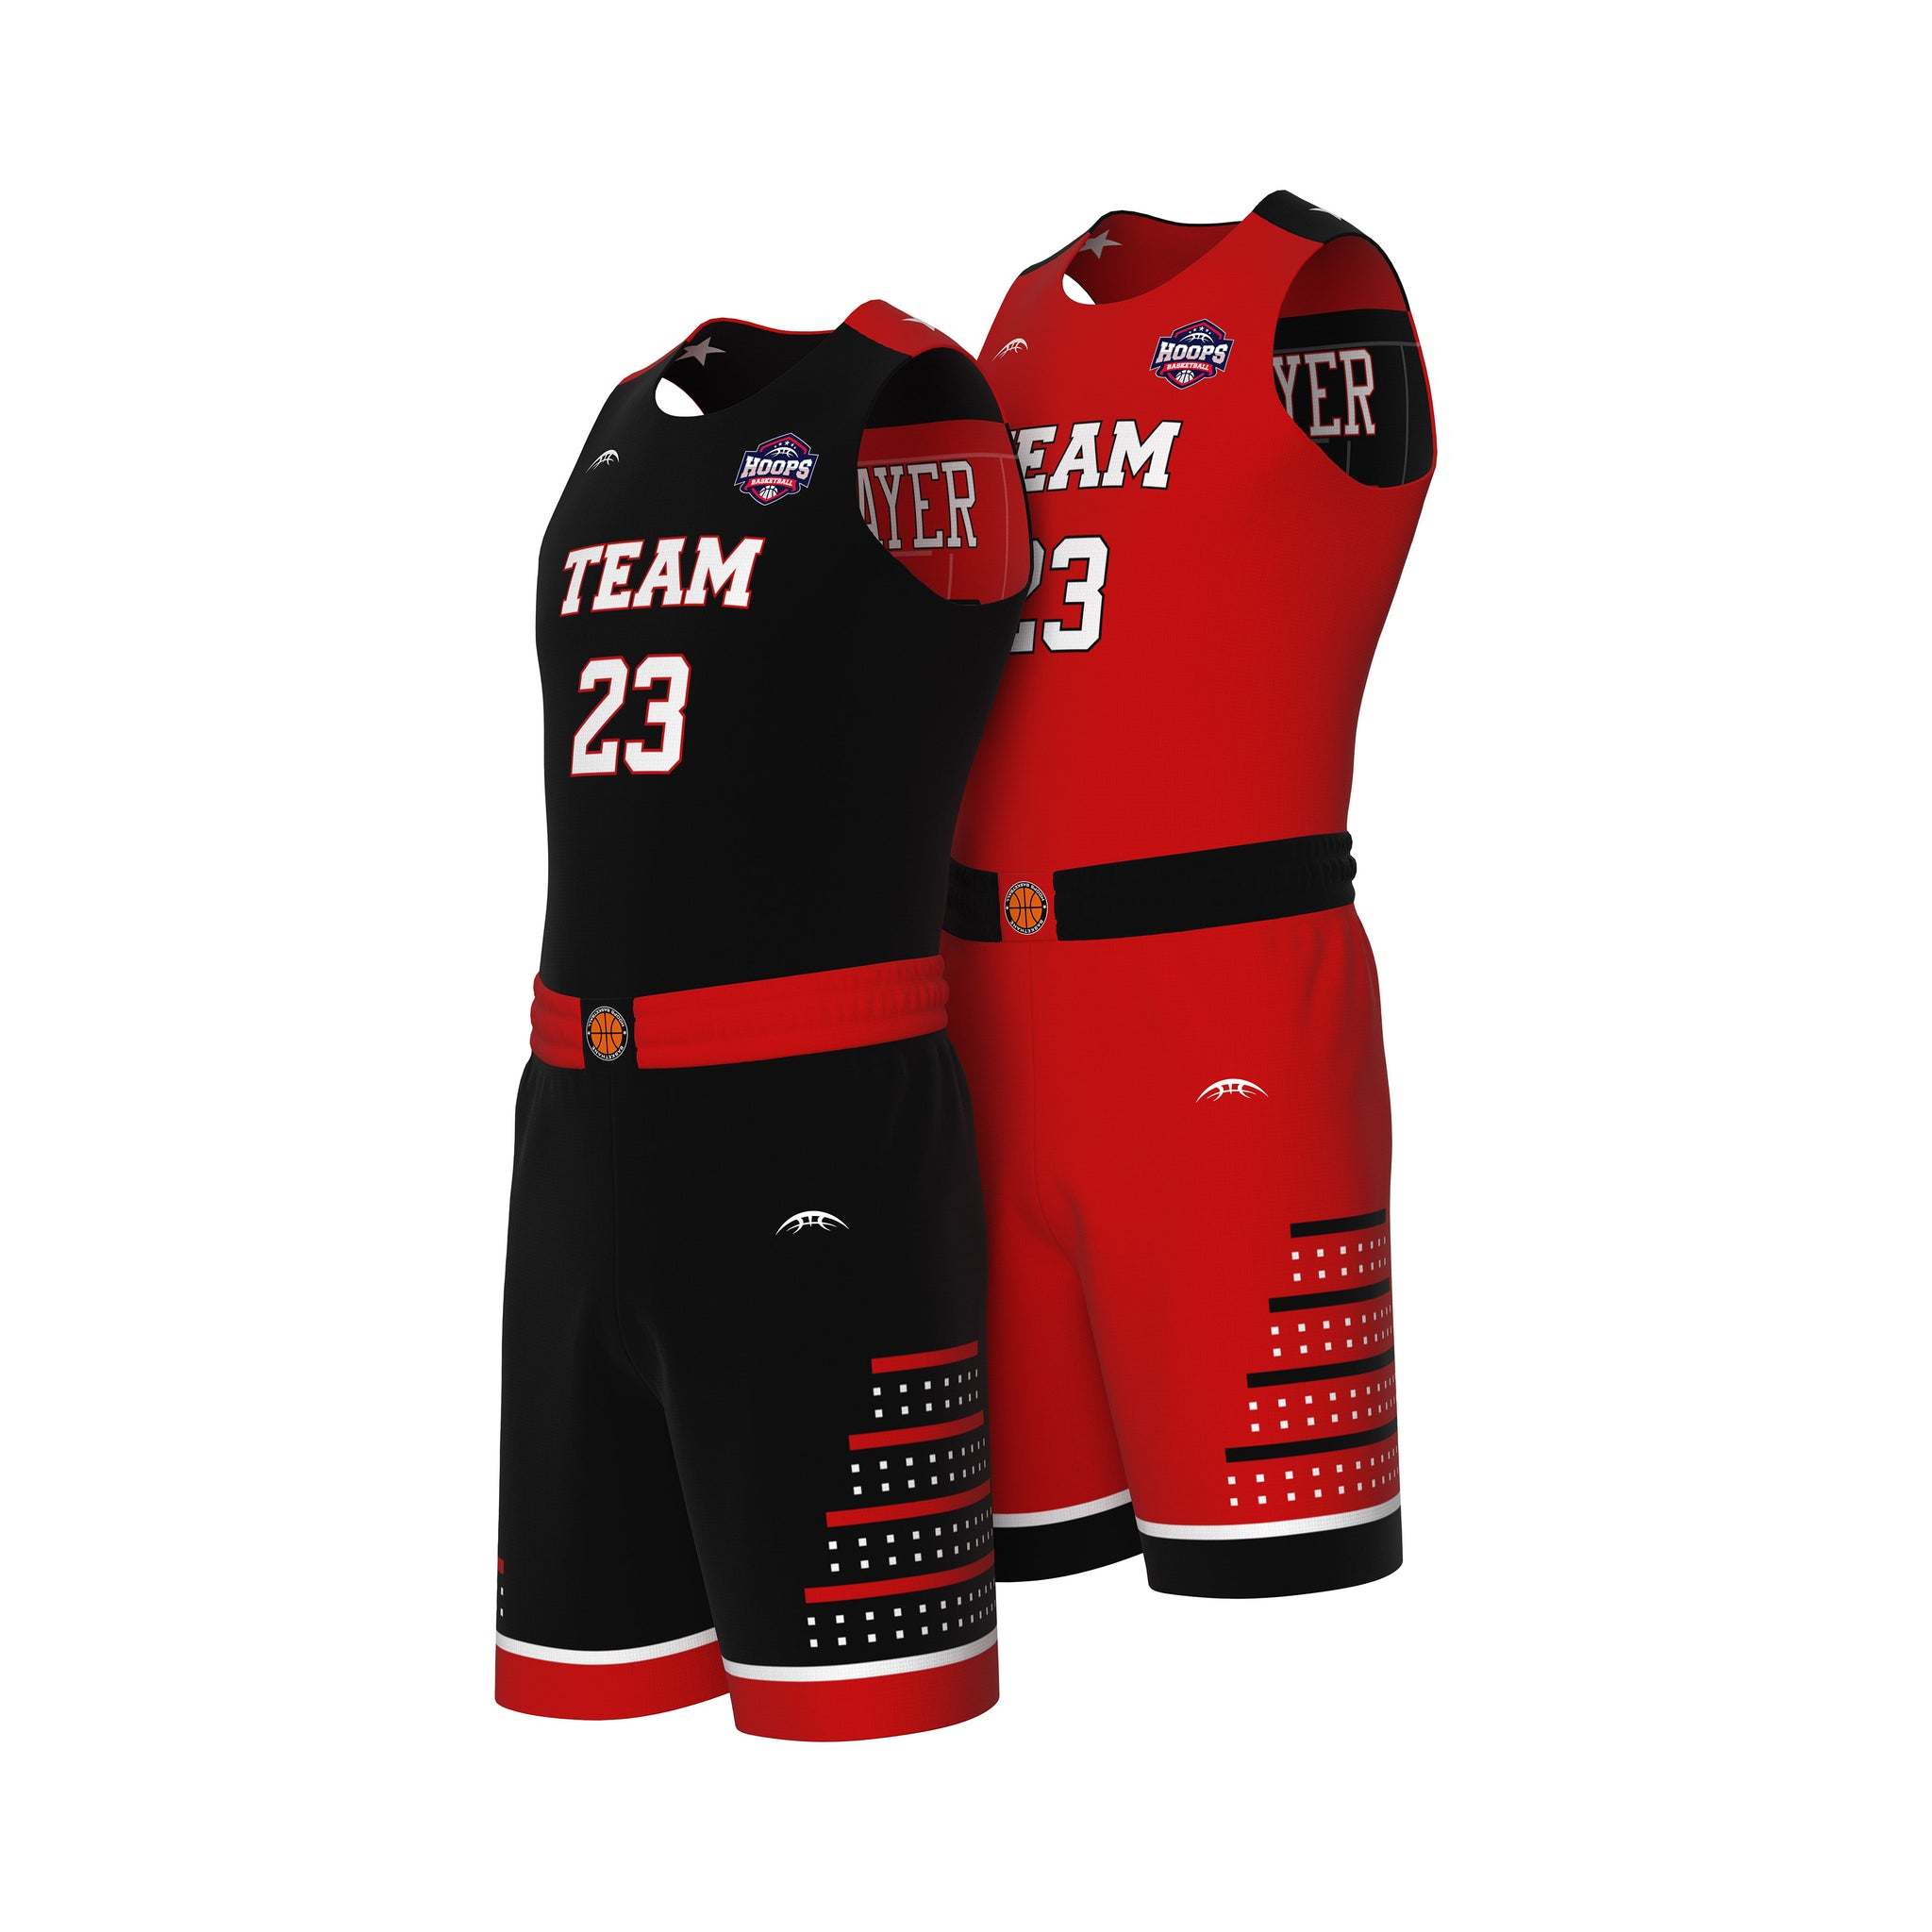 Custom All-Star Reversible Basketball Uniform  - 171 Cowboys